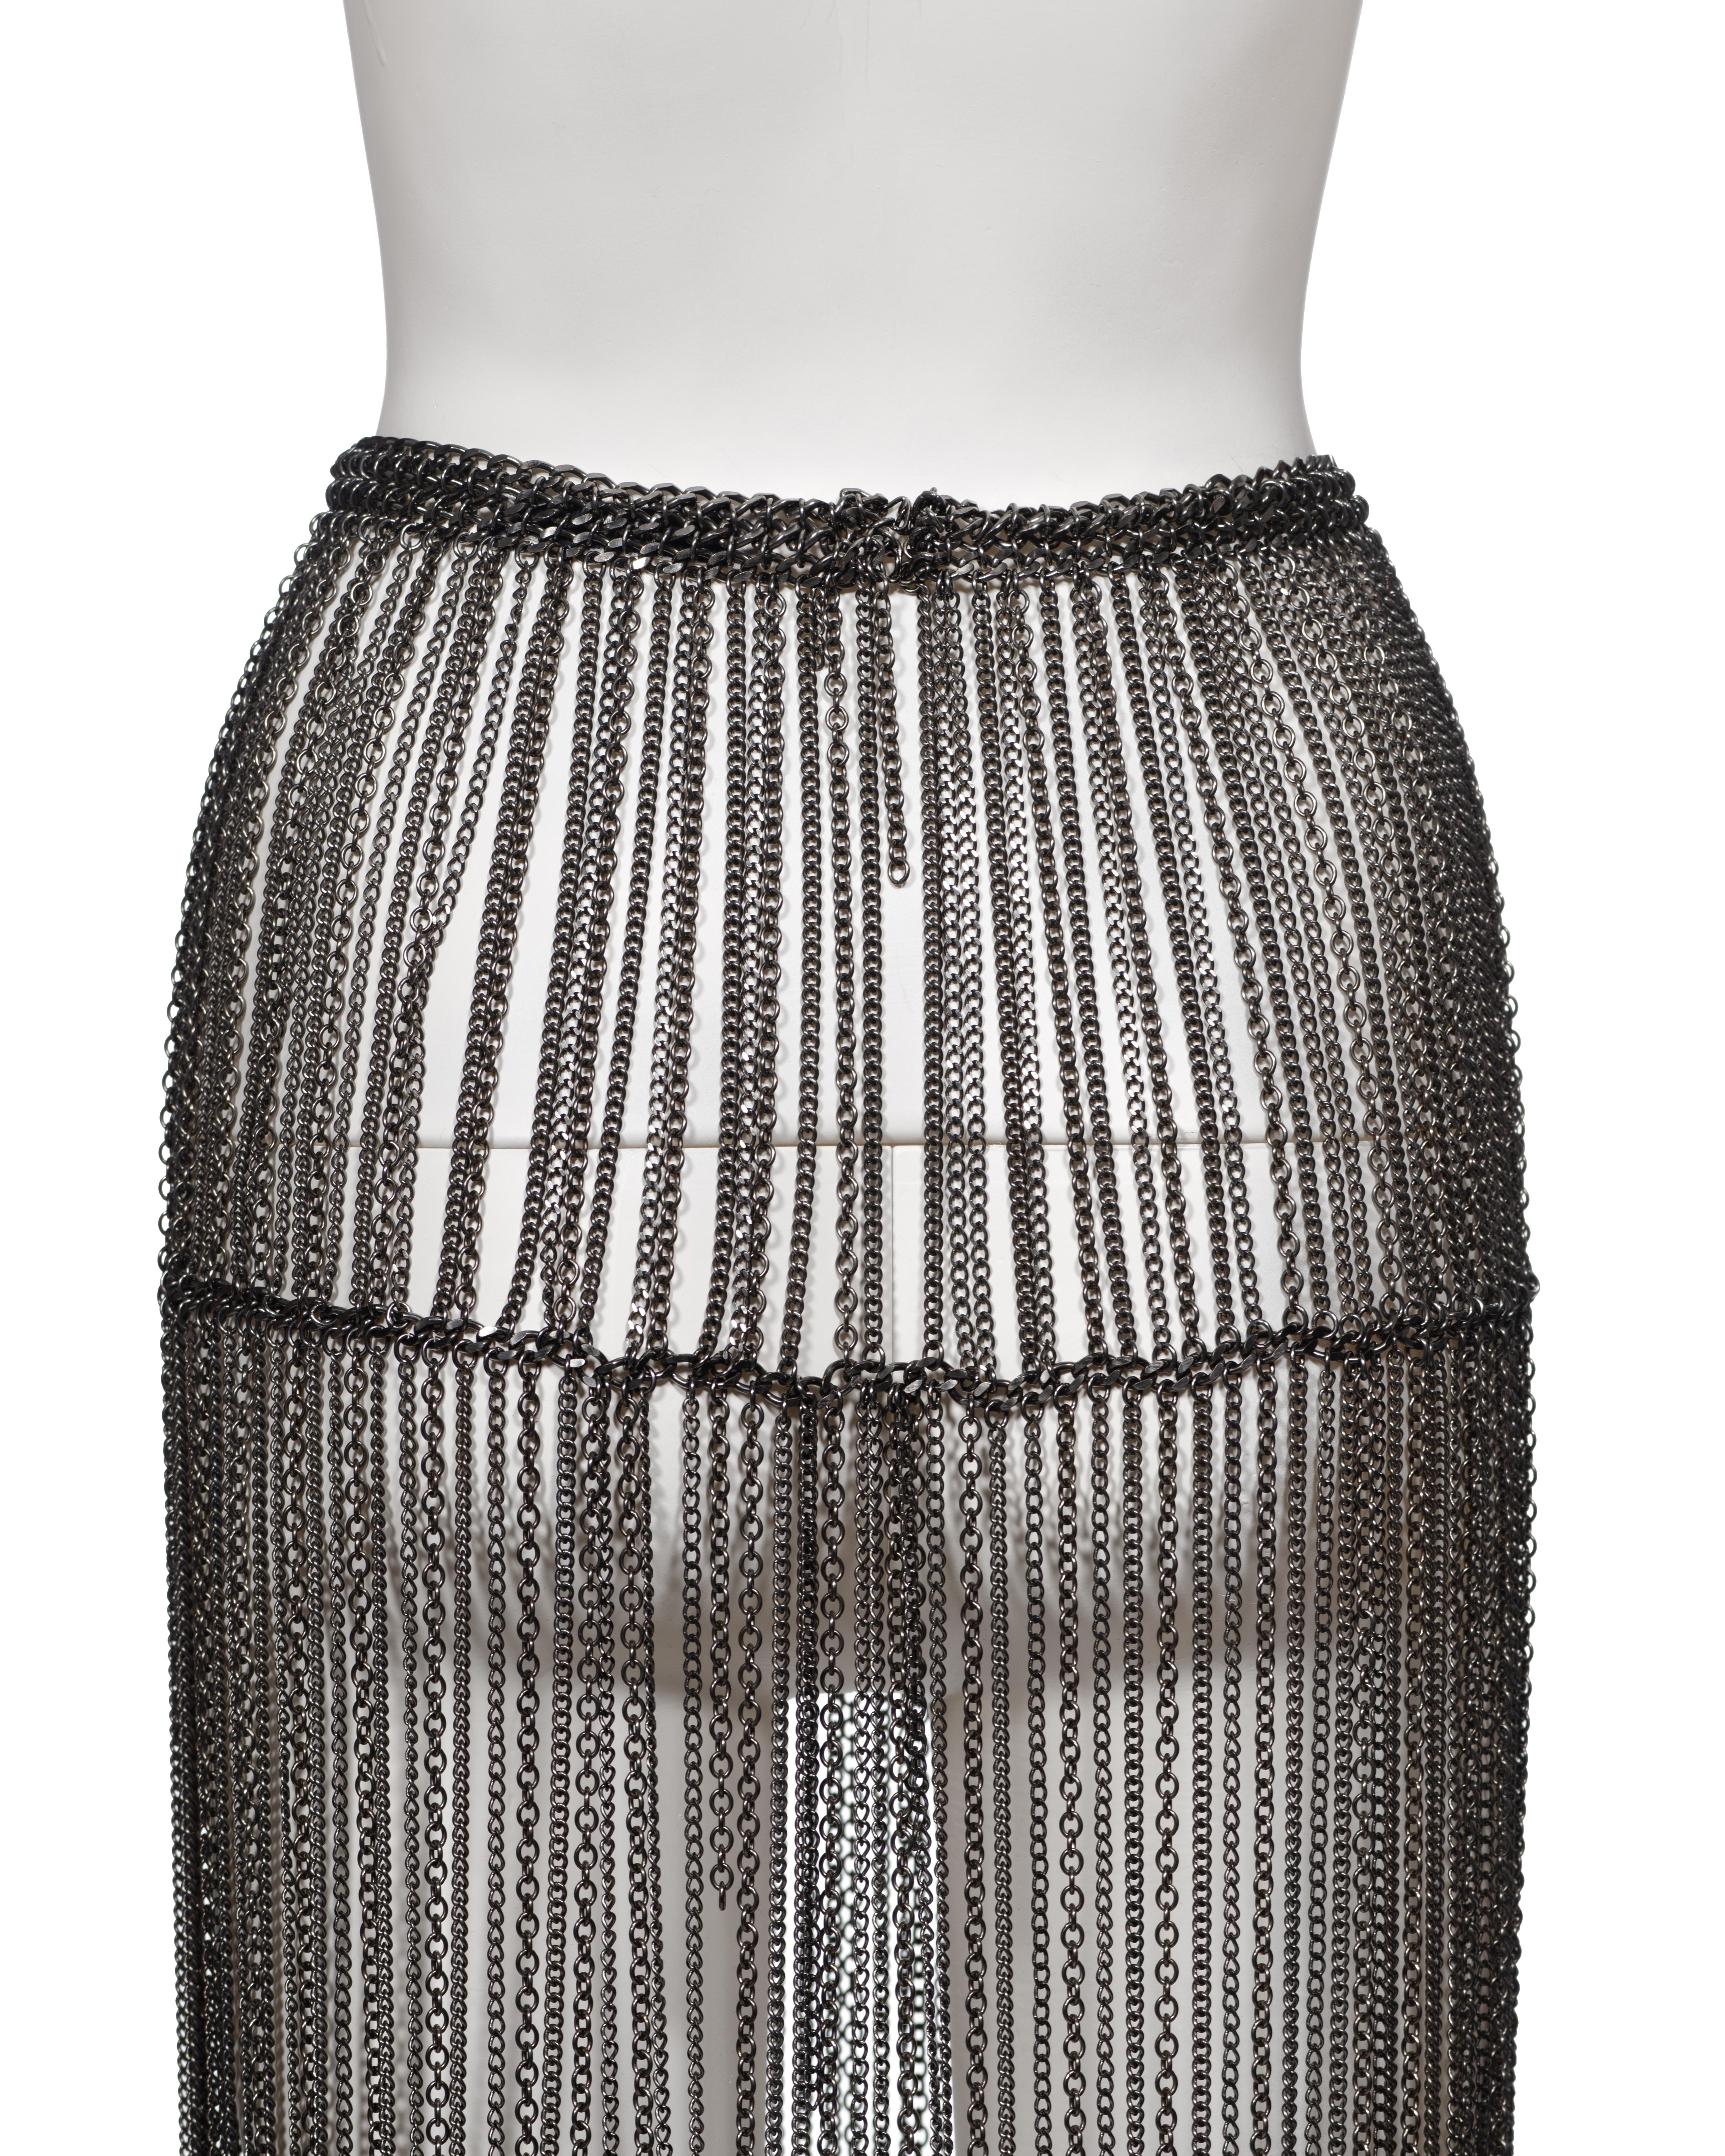 Prada by Miuccia Prada Silver Metal Chain Fringed Evening Skirt, fw 2002 For Sale 8